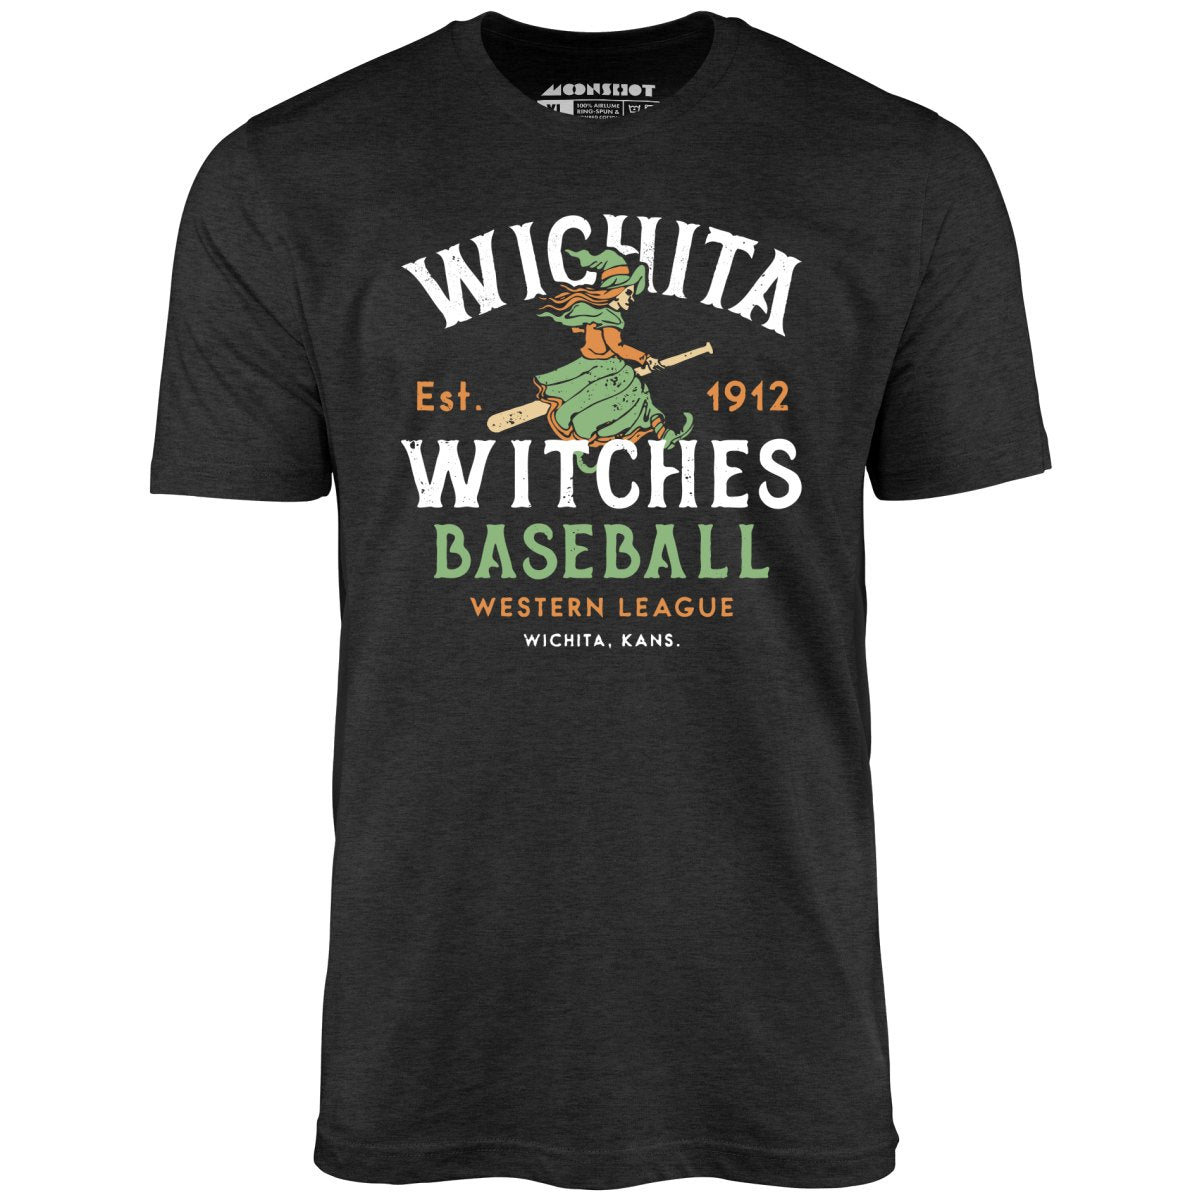 Wichita Witches - Kansas - Vintage Defunct Baseball Teams - Unisex T-Shirt